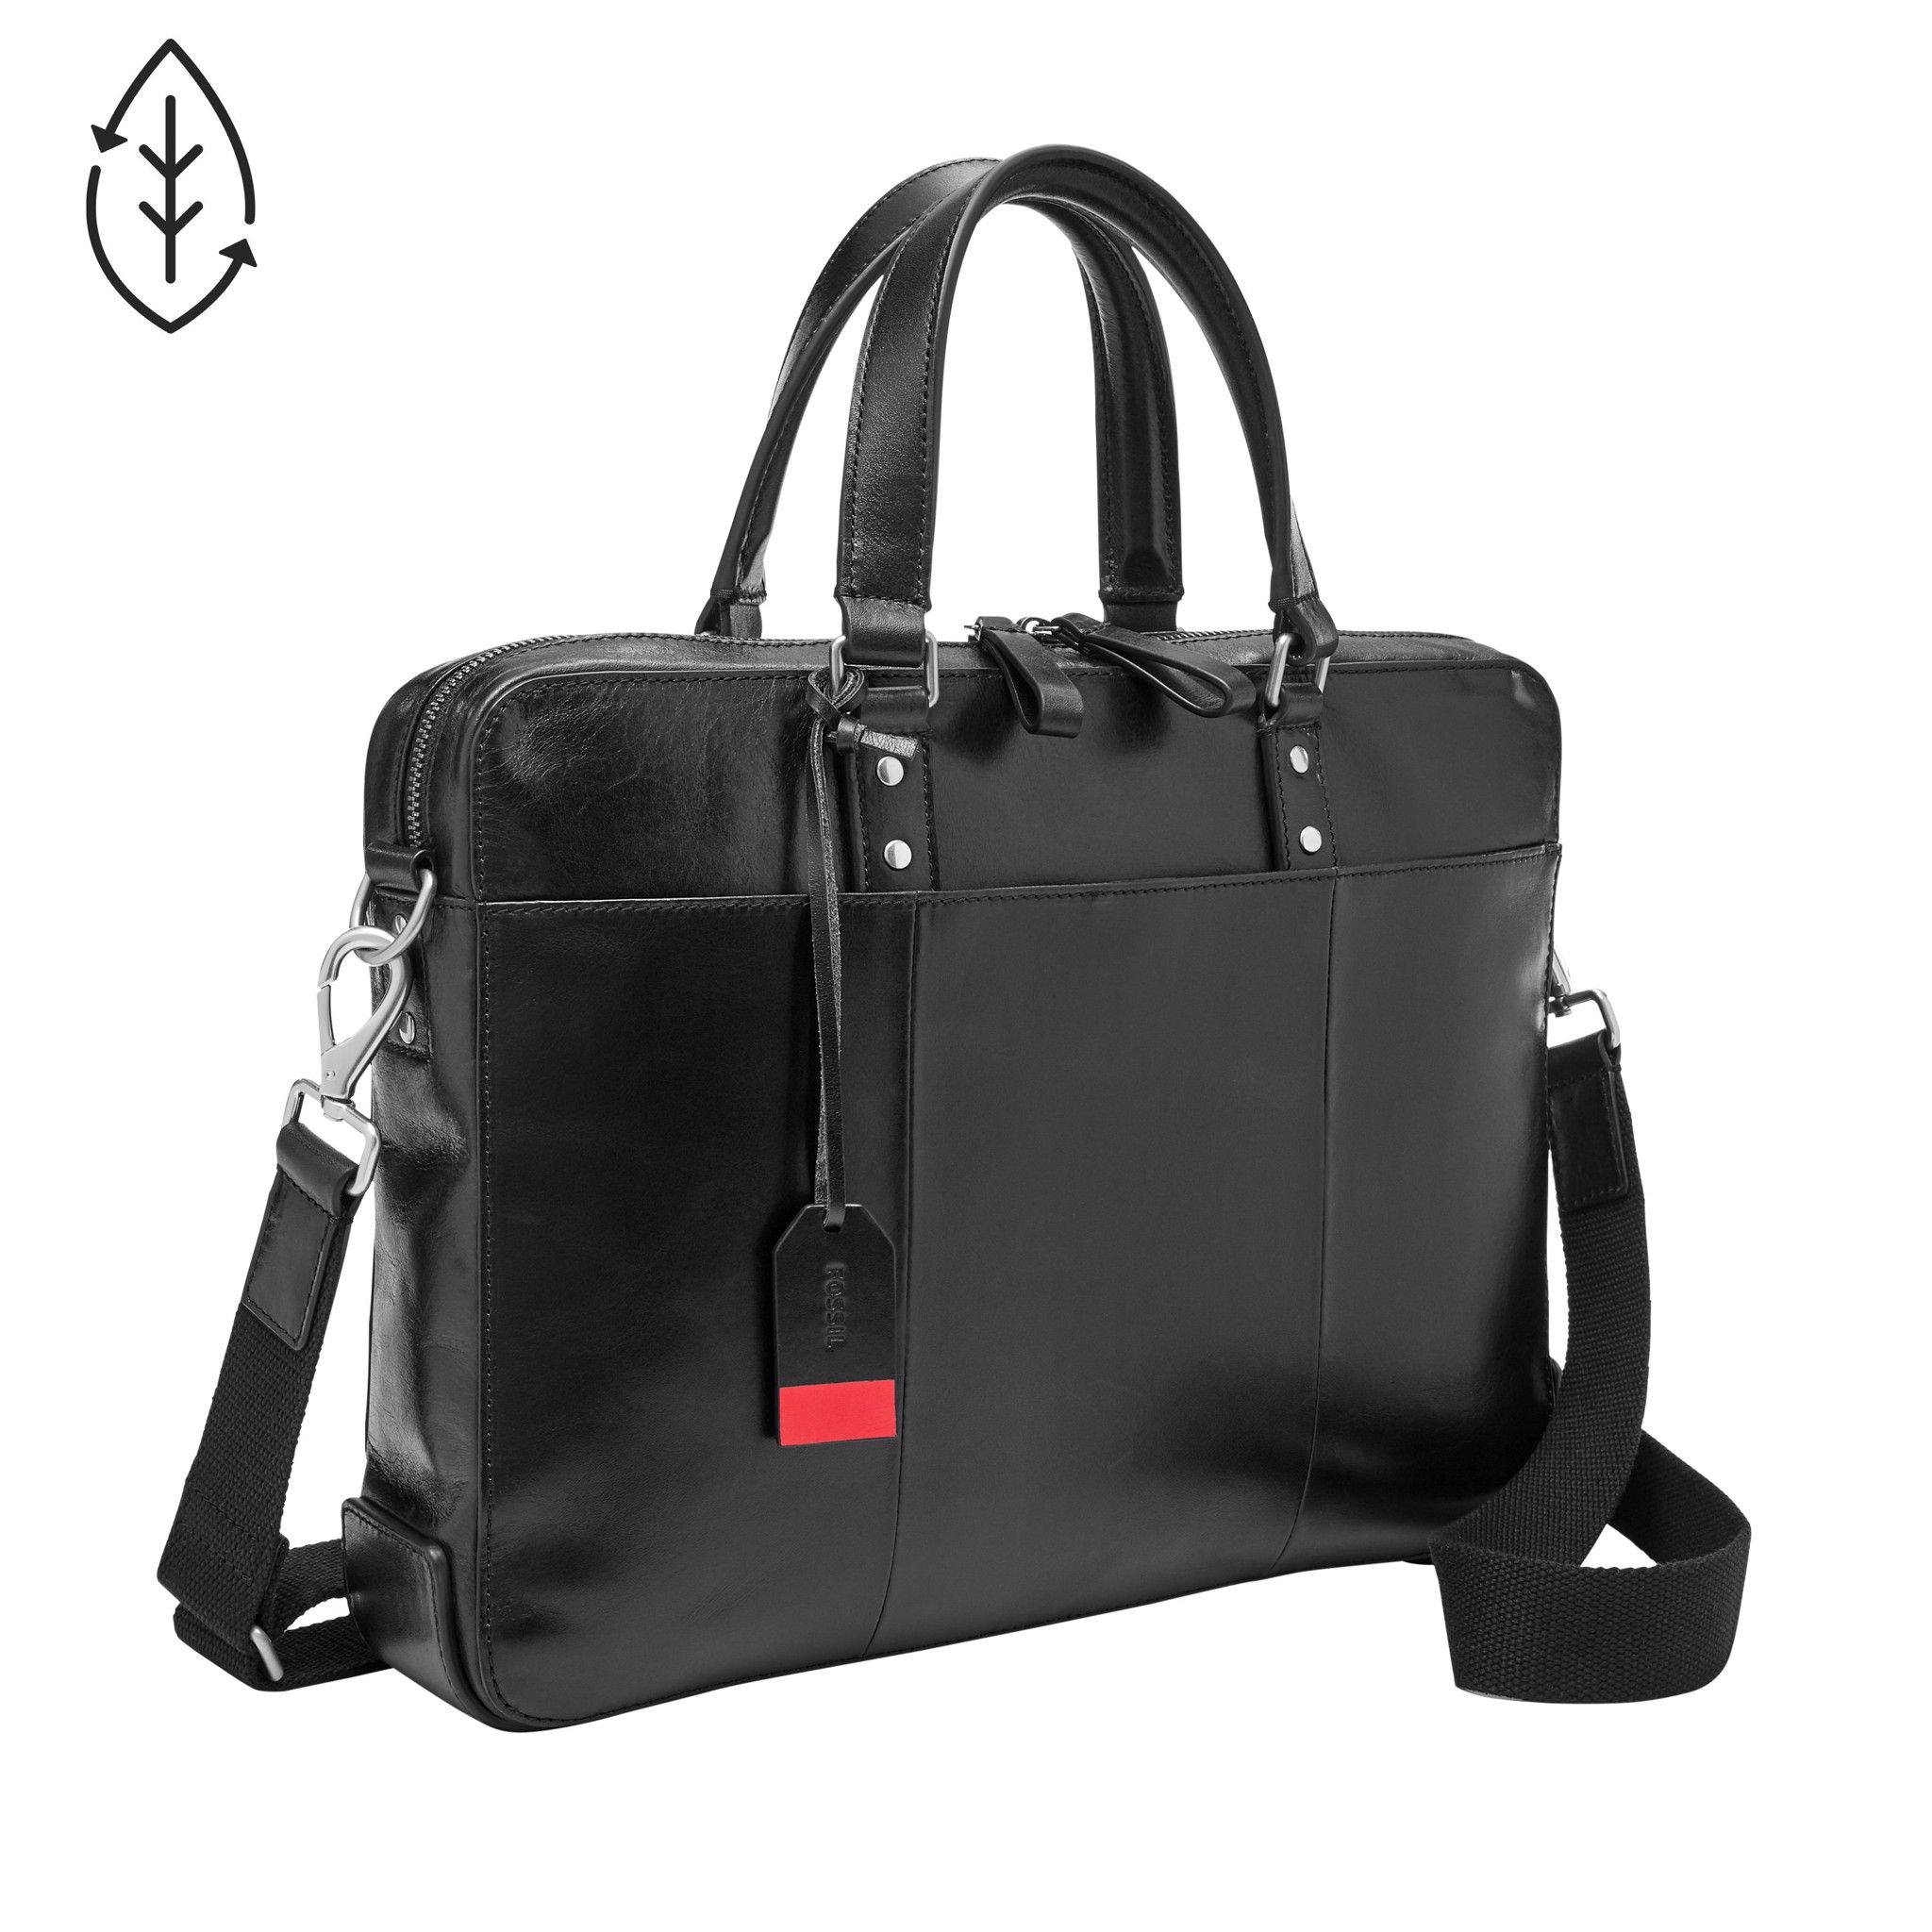  Túi đeo chéo nam Fossil Defender Shoulder Bag MBG9463001 - màu đen 